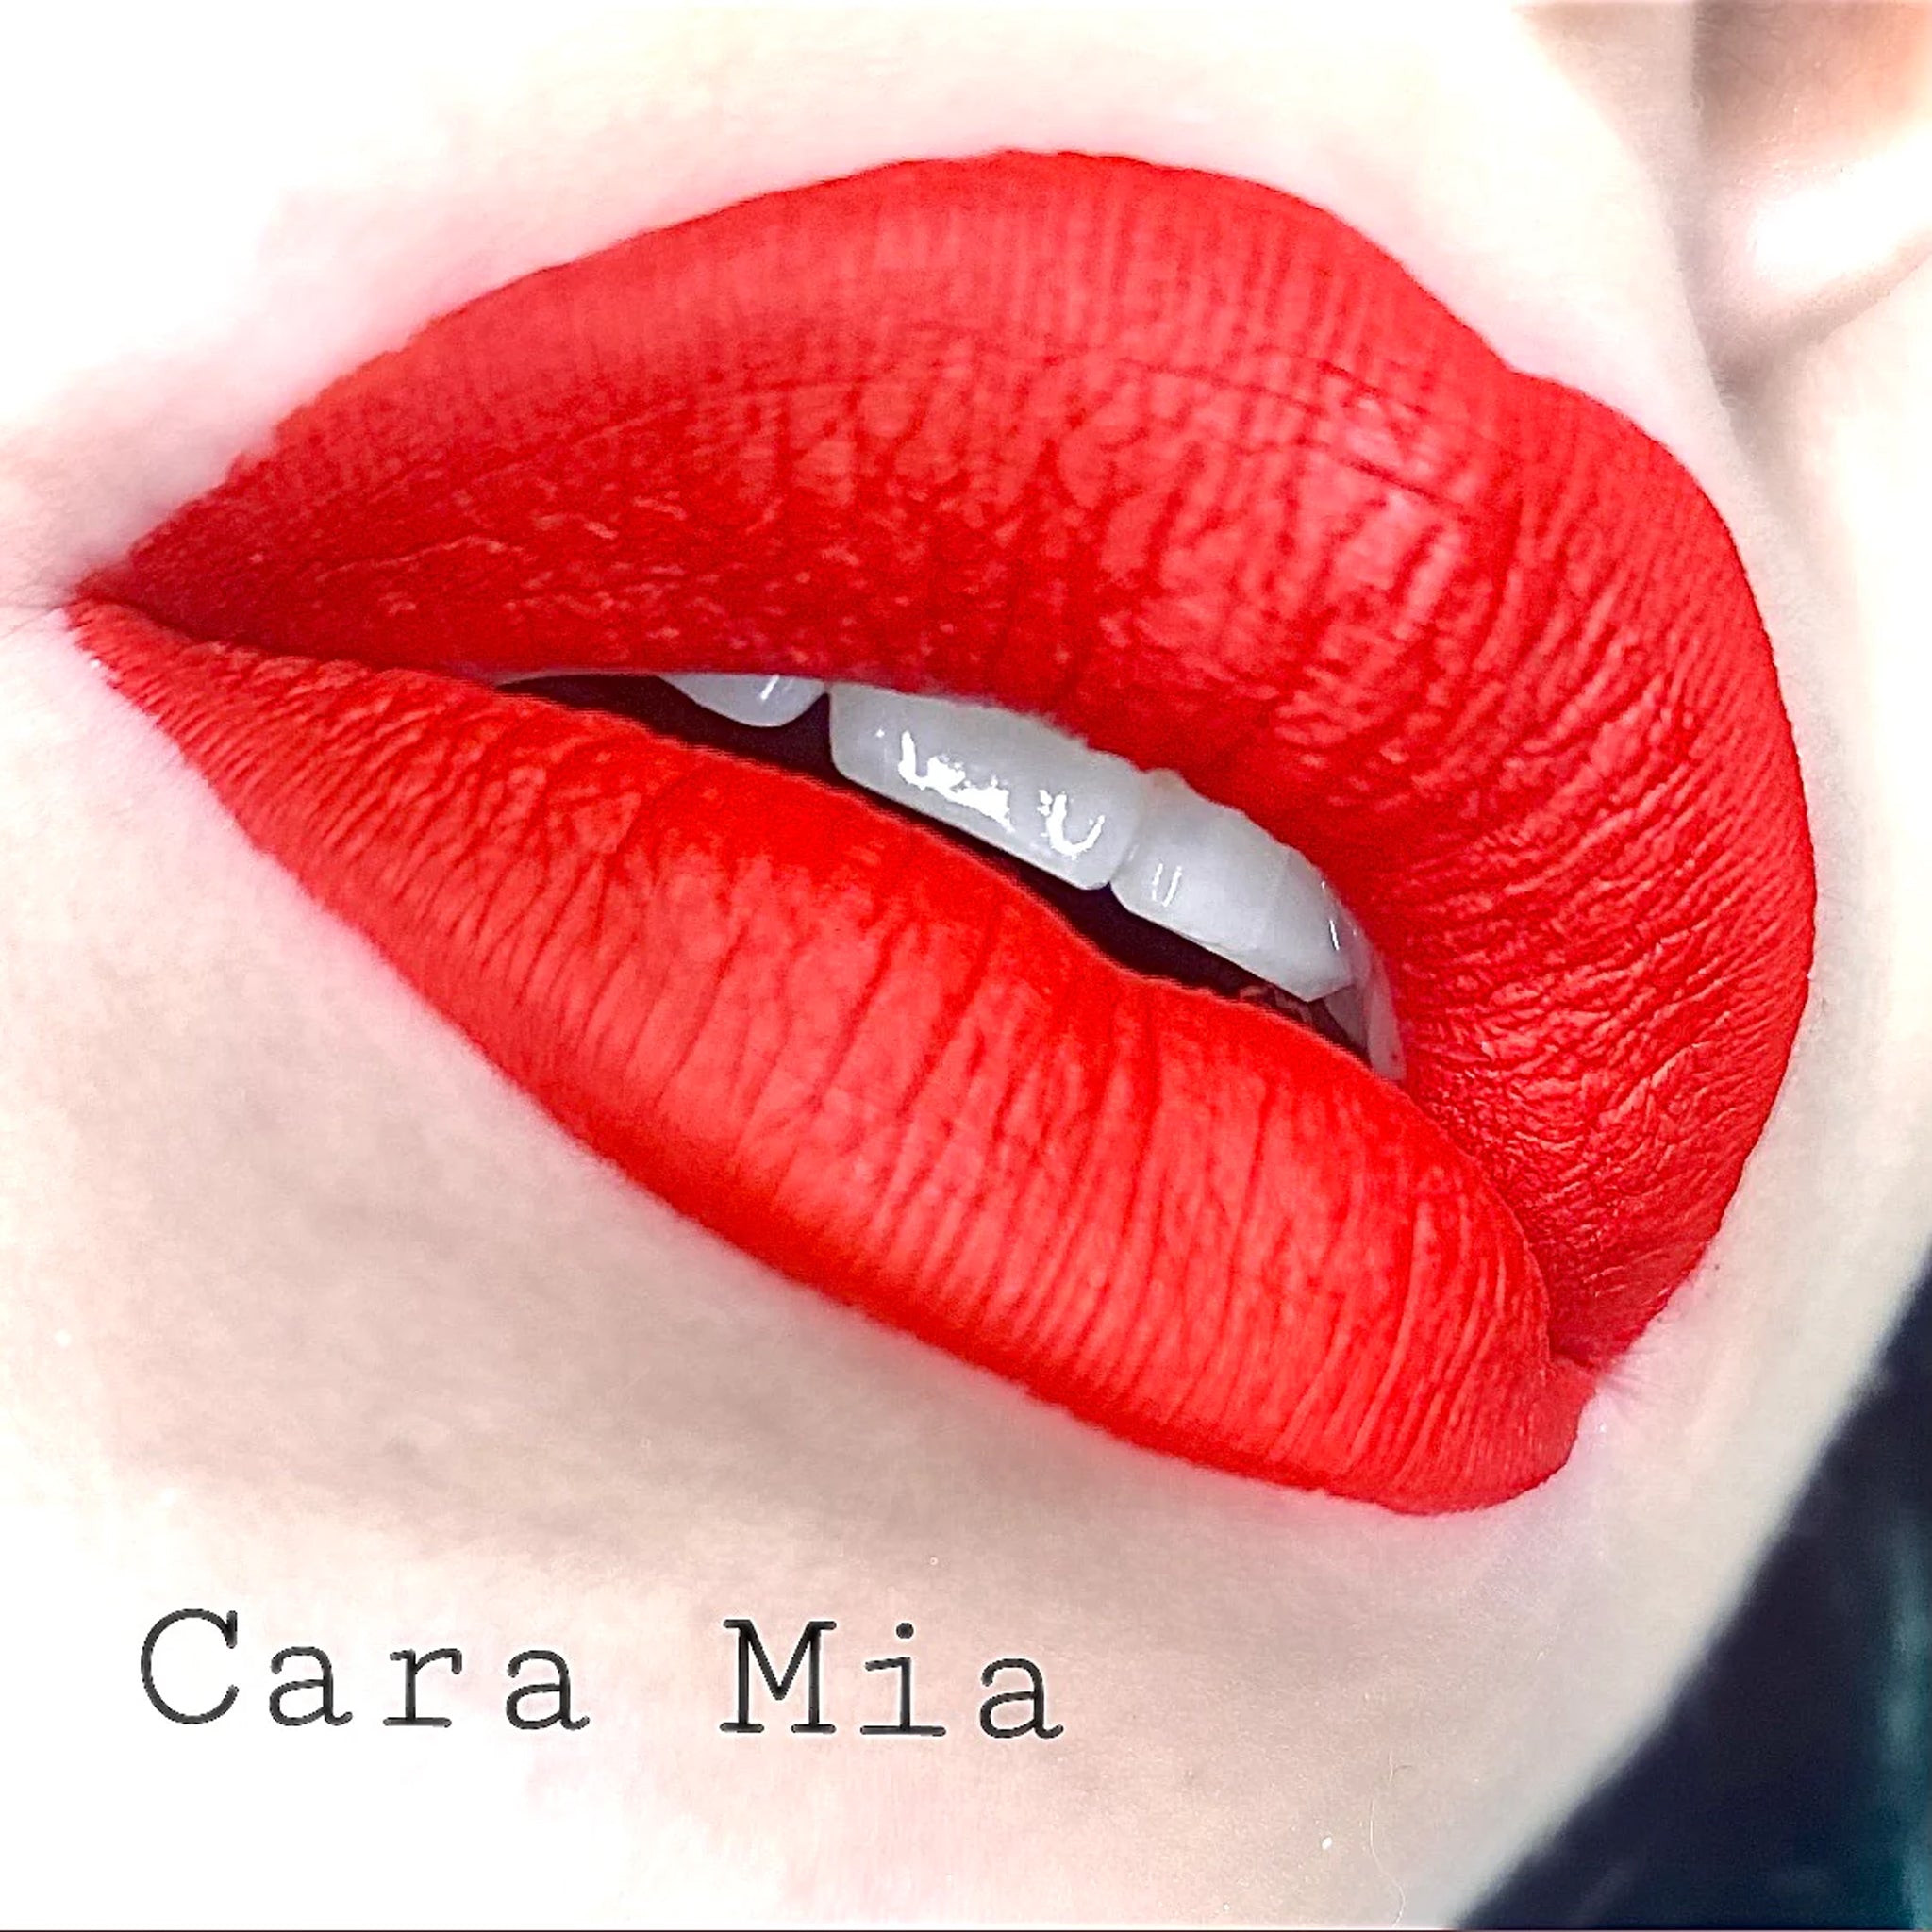 Imperishable Liquid Lipsticks Cara Mia $16